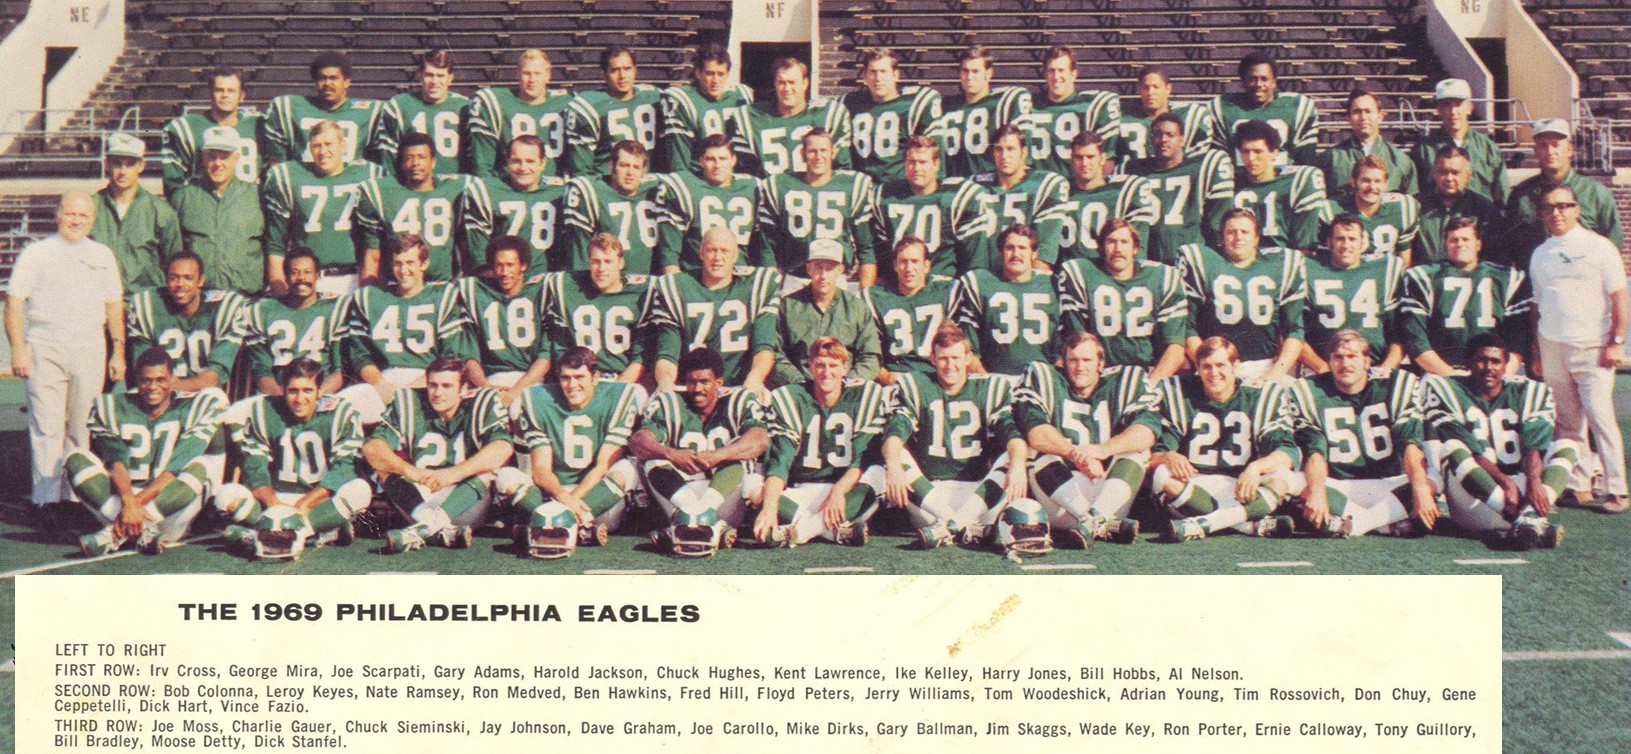 Philadelphia Eagles 1969 (NFL)